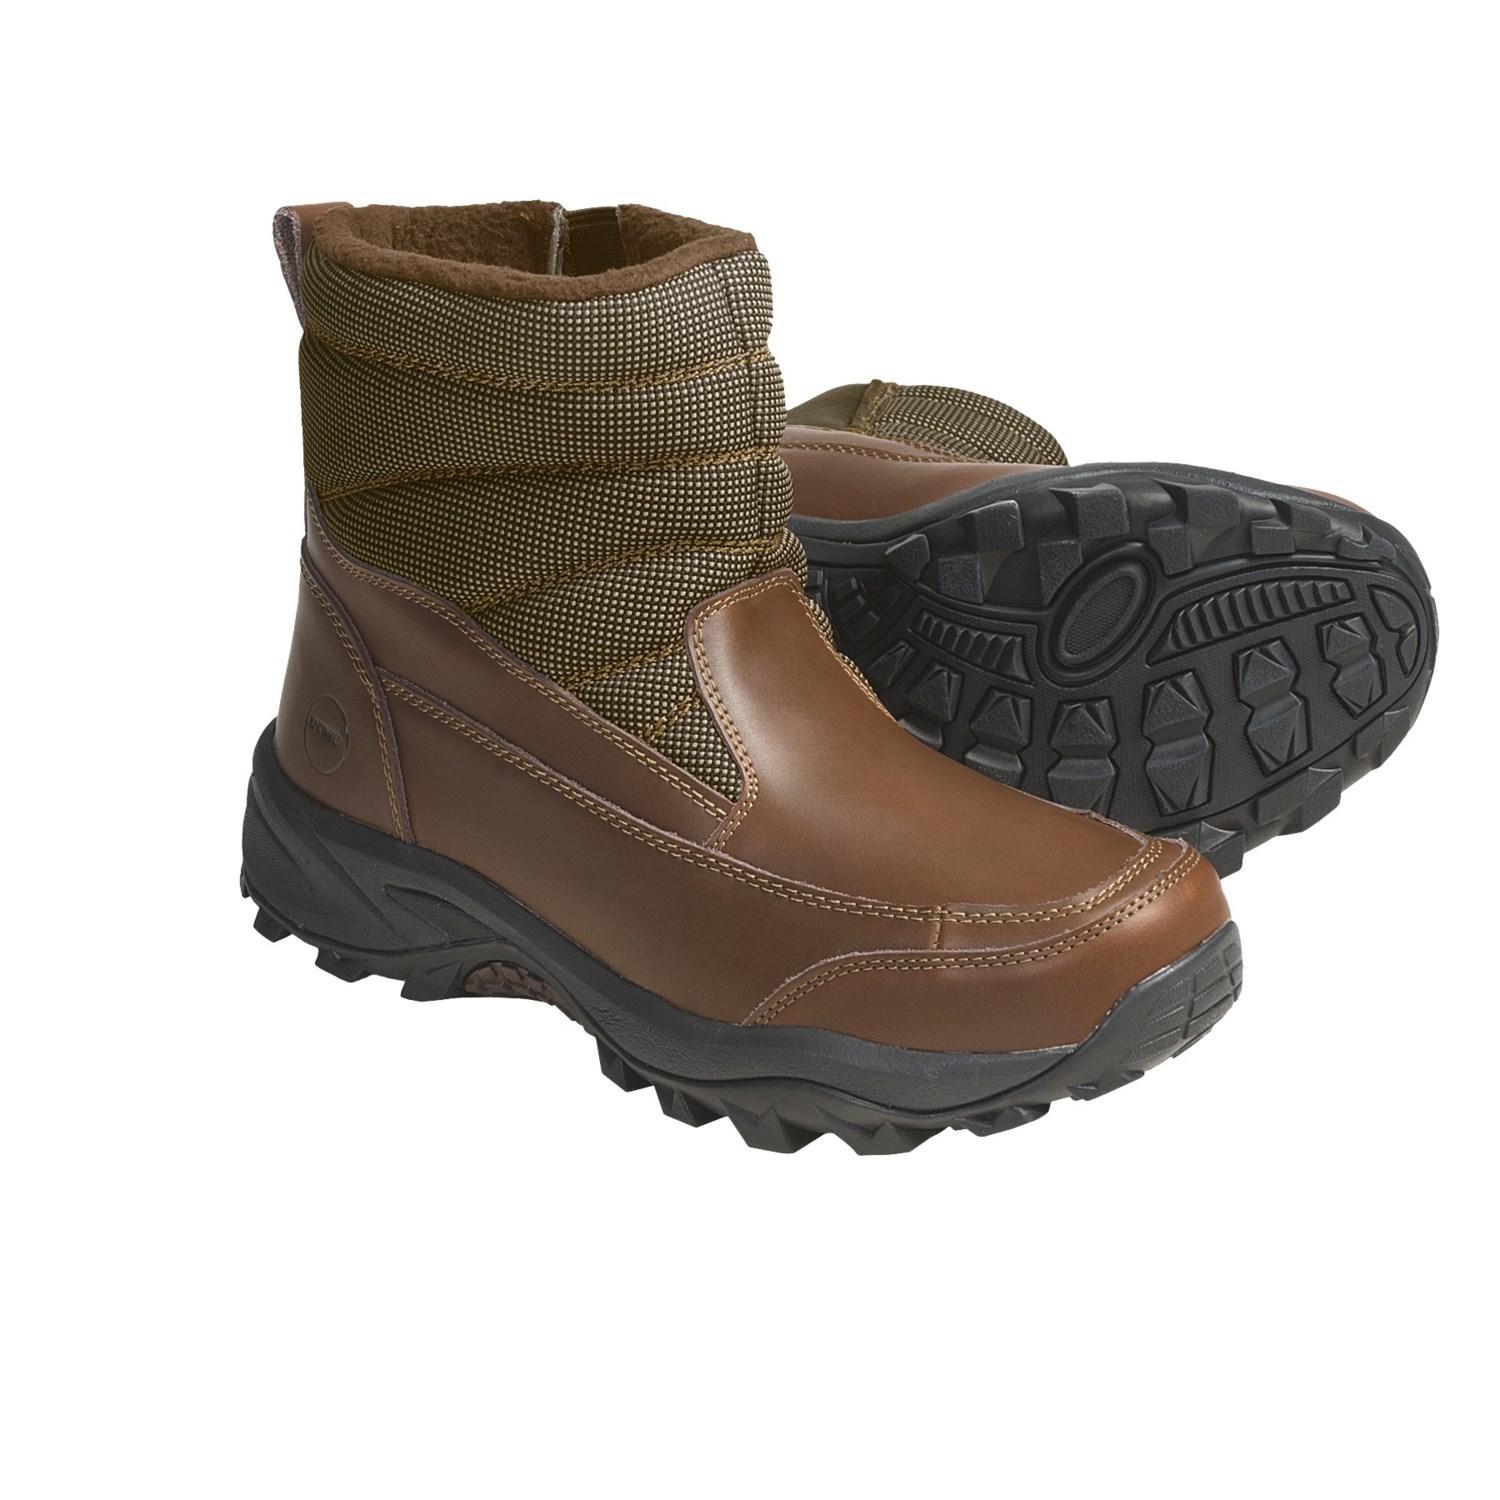 Khombu Mogul 2 Winter Boots - Waterproof (For Men) - Save 32%